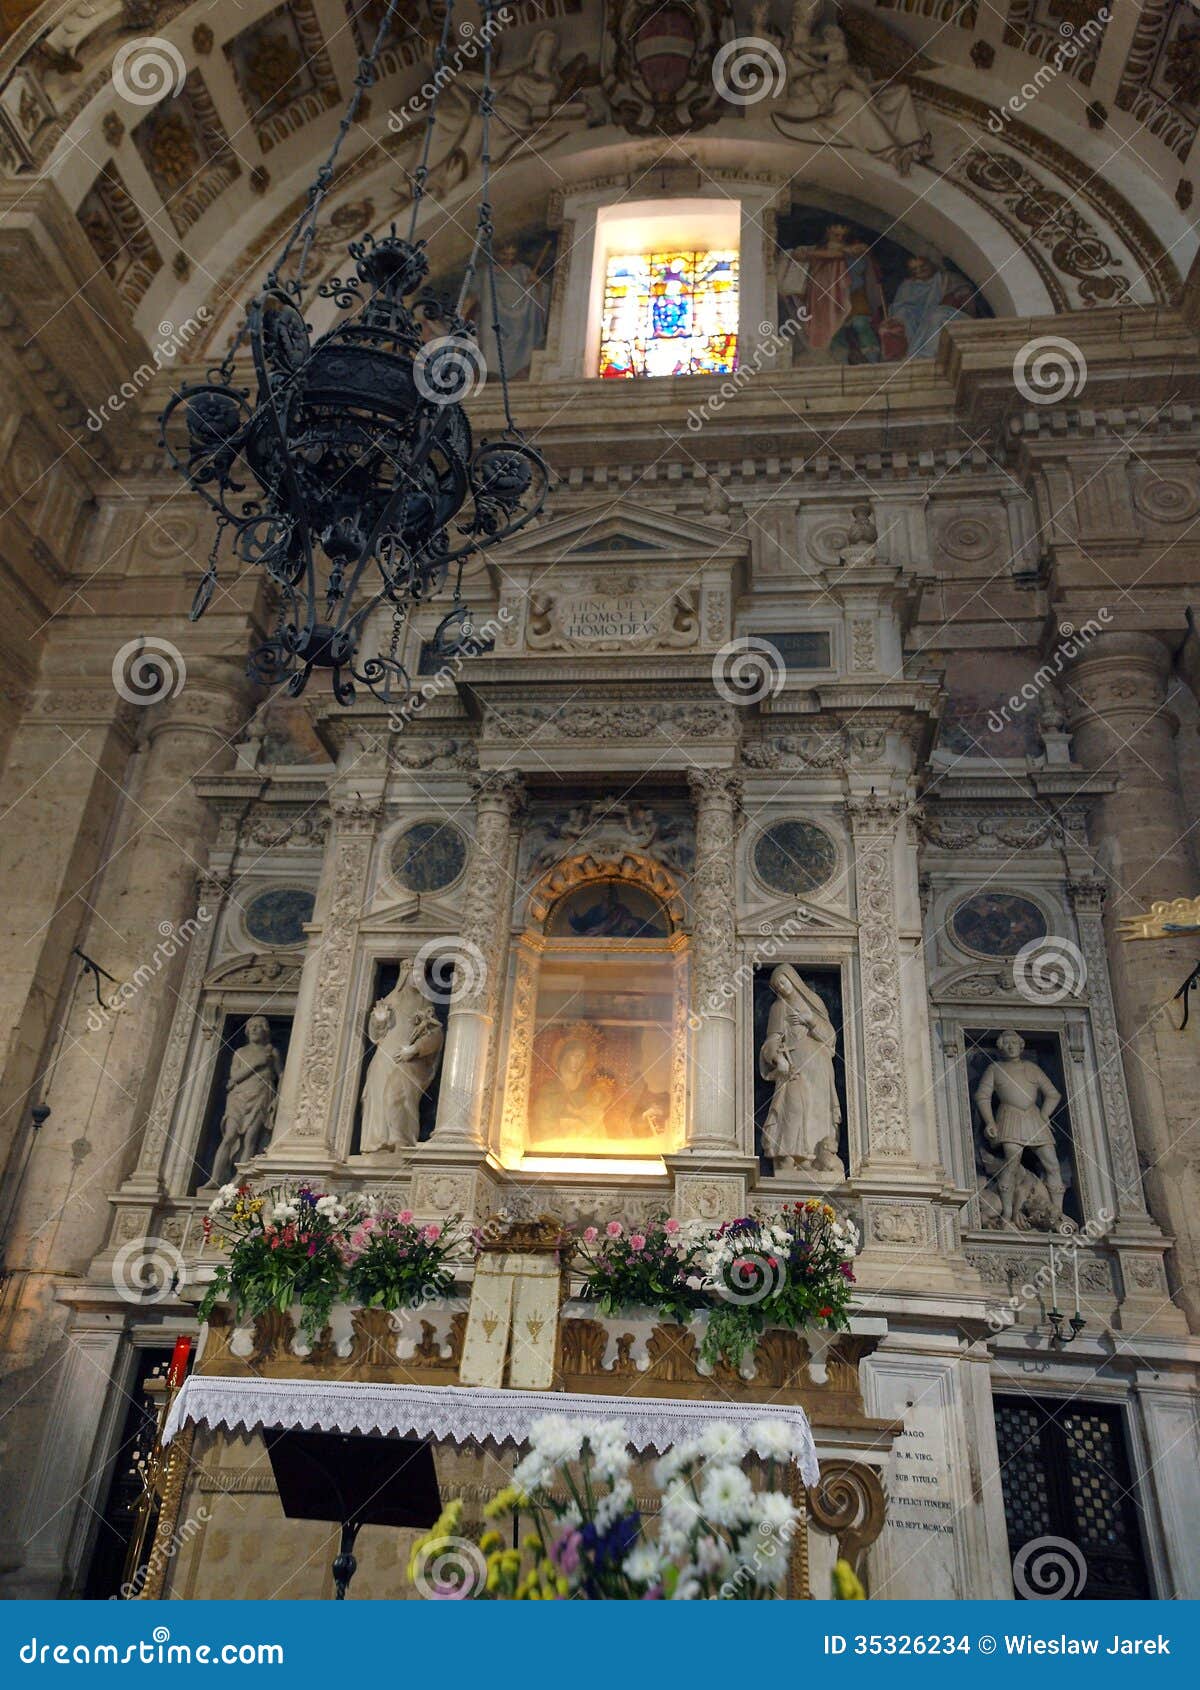 Top 104+ Images sanctuary of the madonna di san biagio Latest